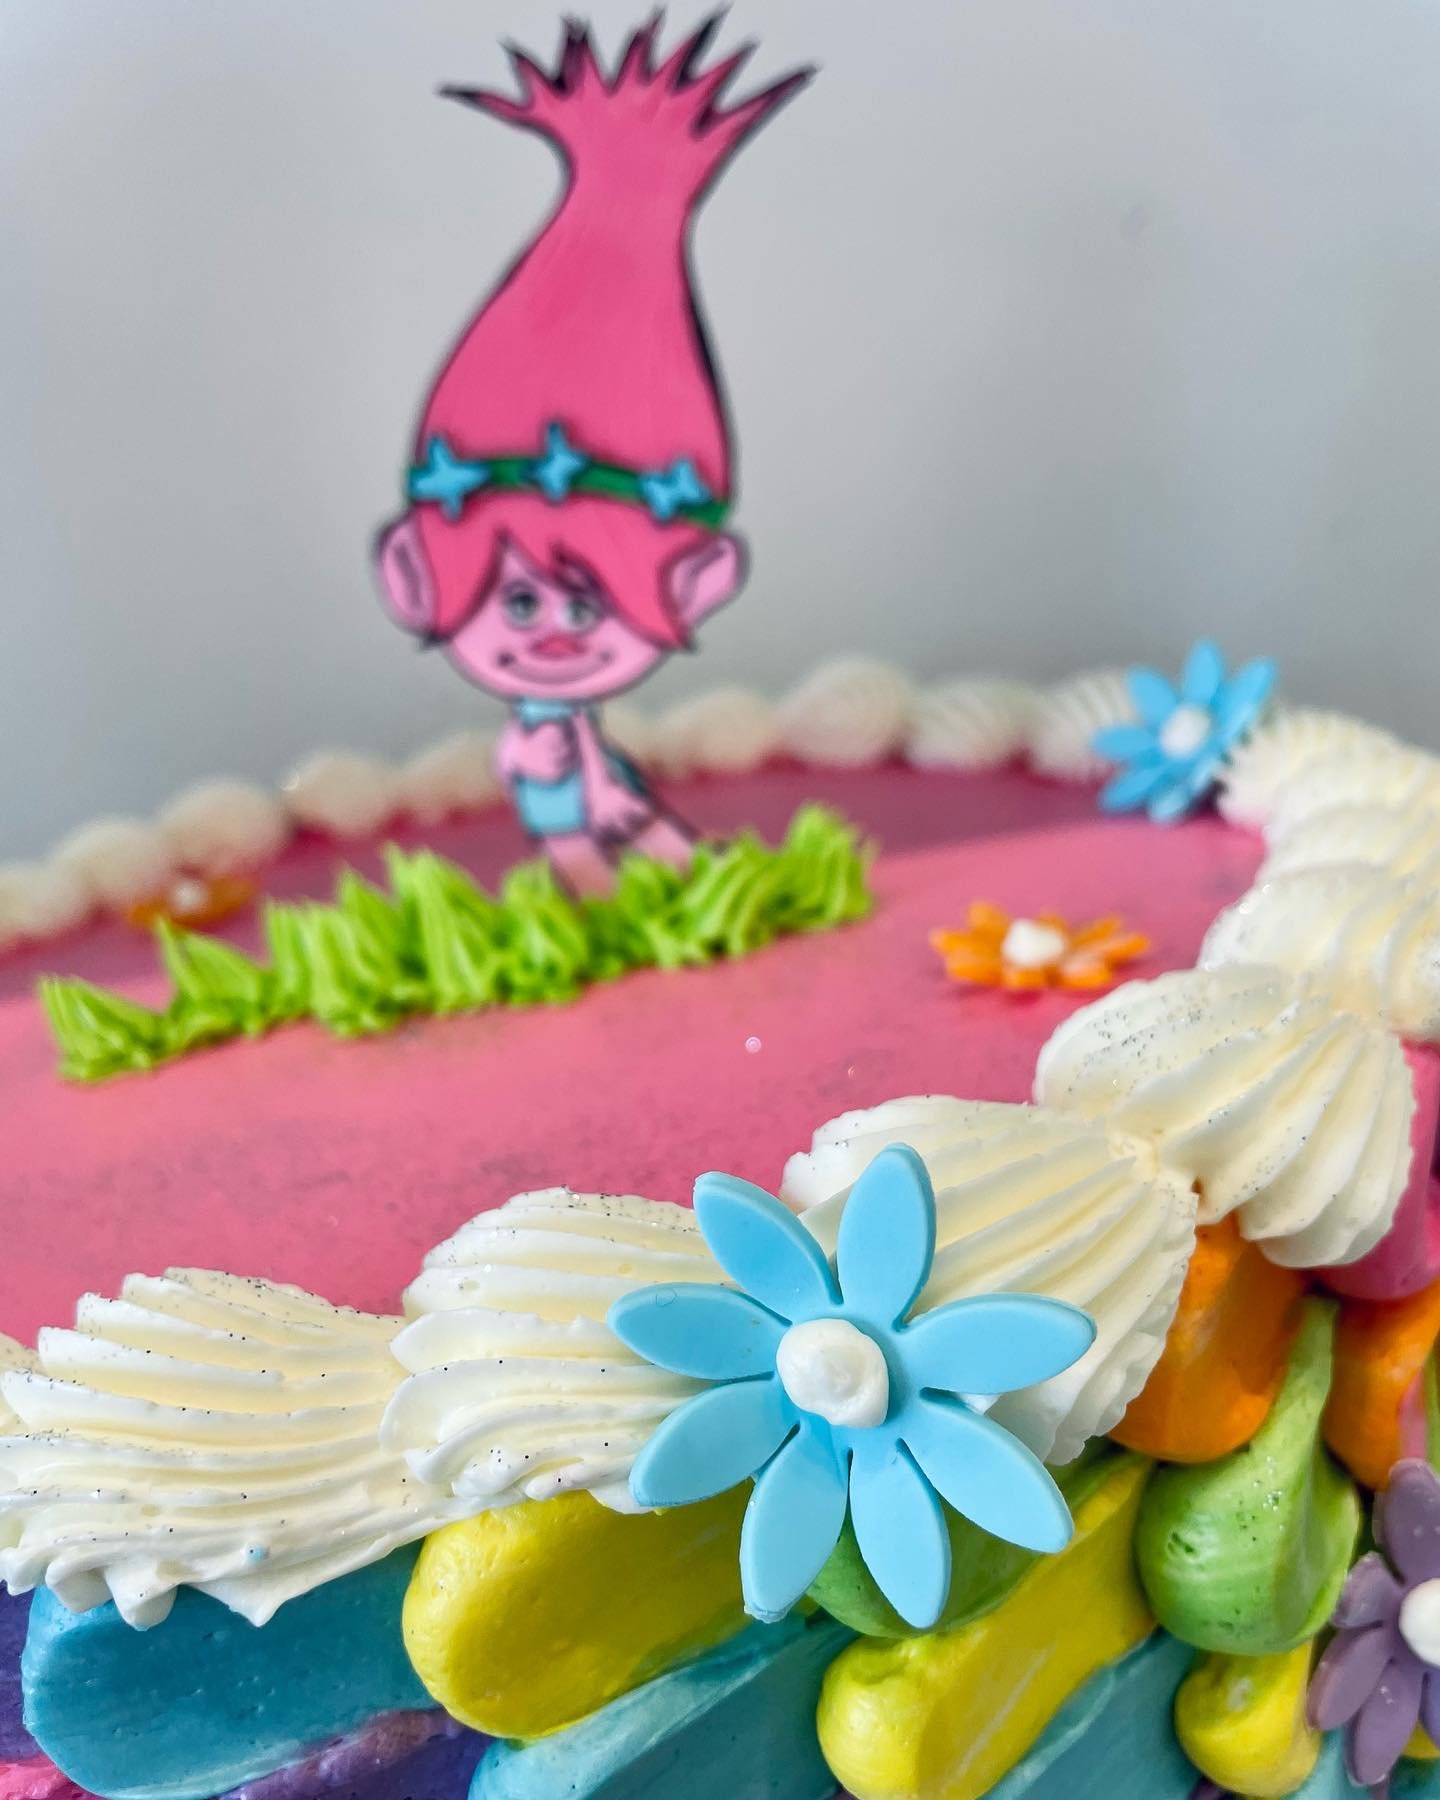 Trolls cake closeup🌼💖

#sweetandflour #secaucus #nj #njbakery #jersey #customcakes #cakelife #cupcakes #smallbusiness

#bakery #cake #baking #dessert #pastry #foodporn #instafood #chocolate #foodie #cookies #cakedecorating #birthdaycake #foodphotog